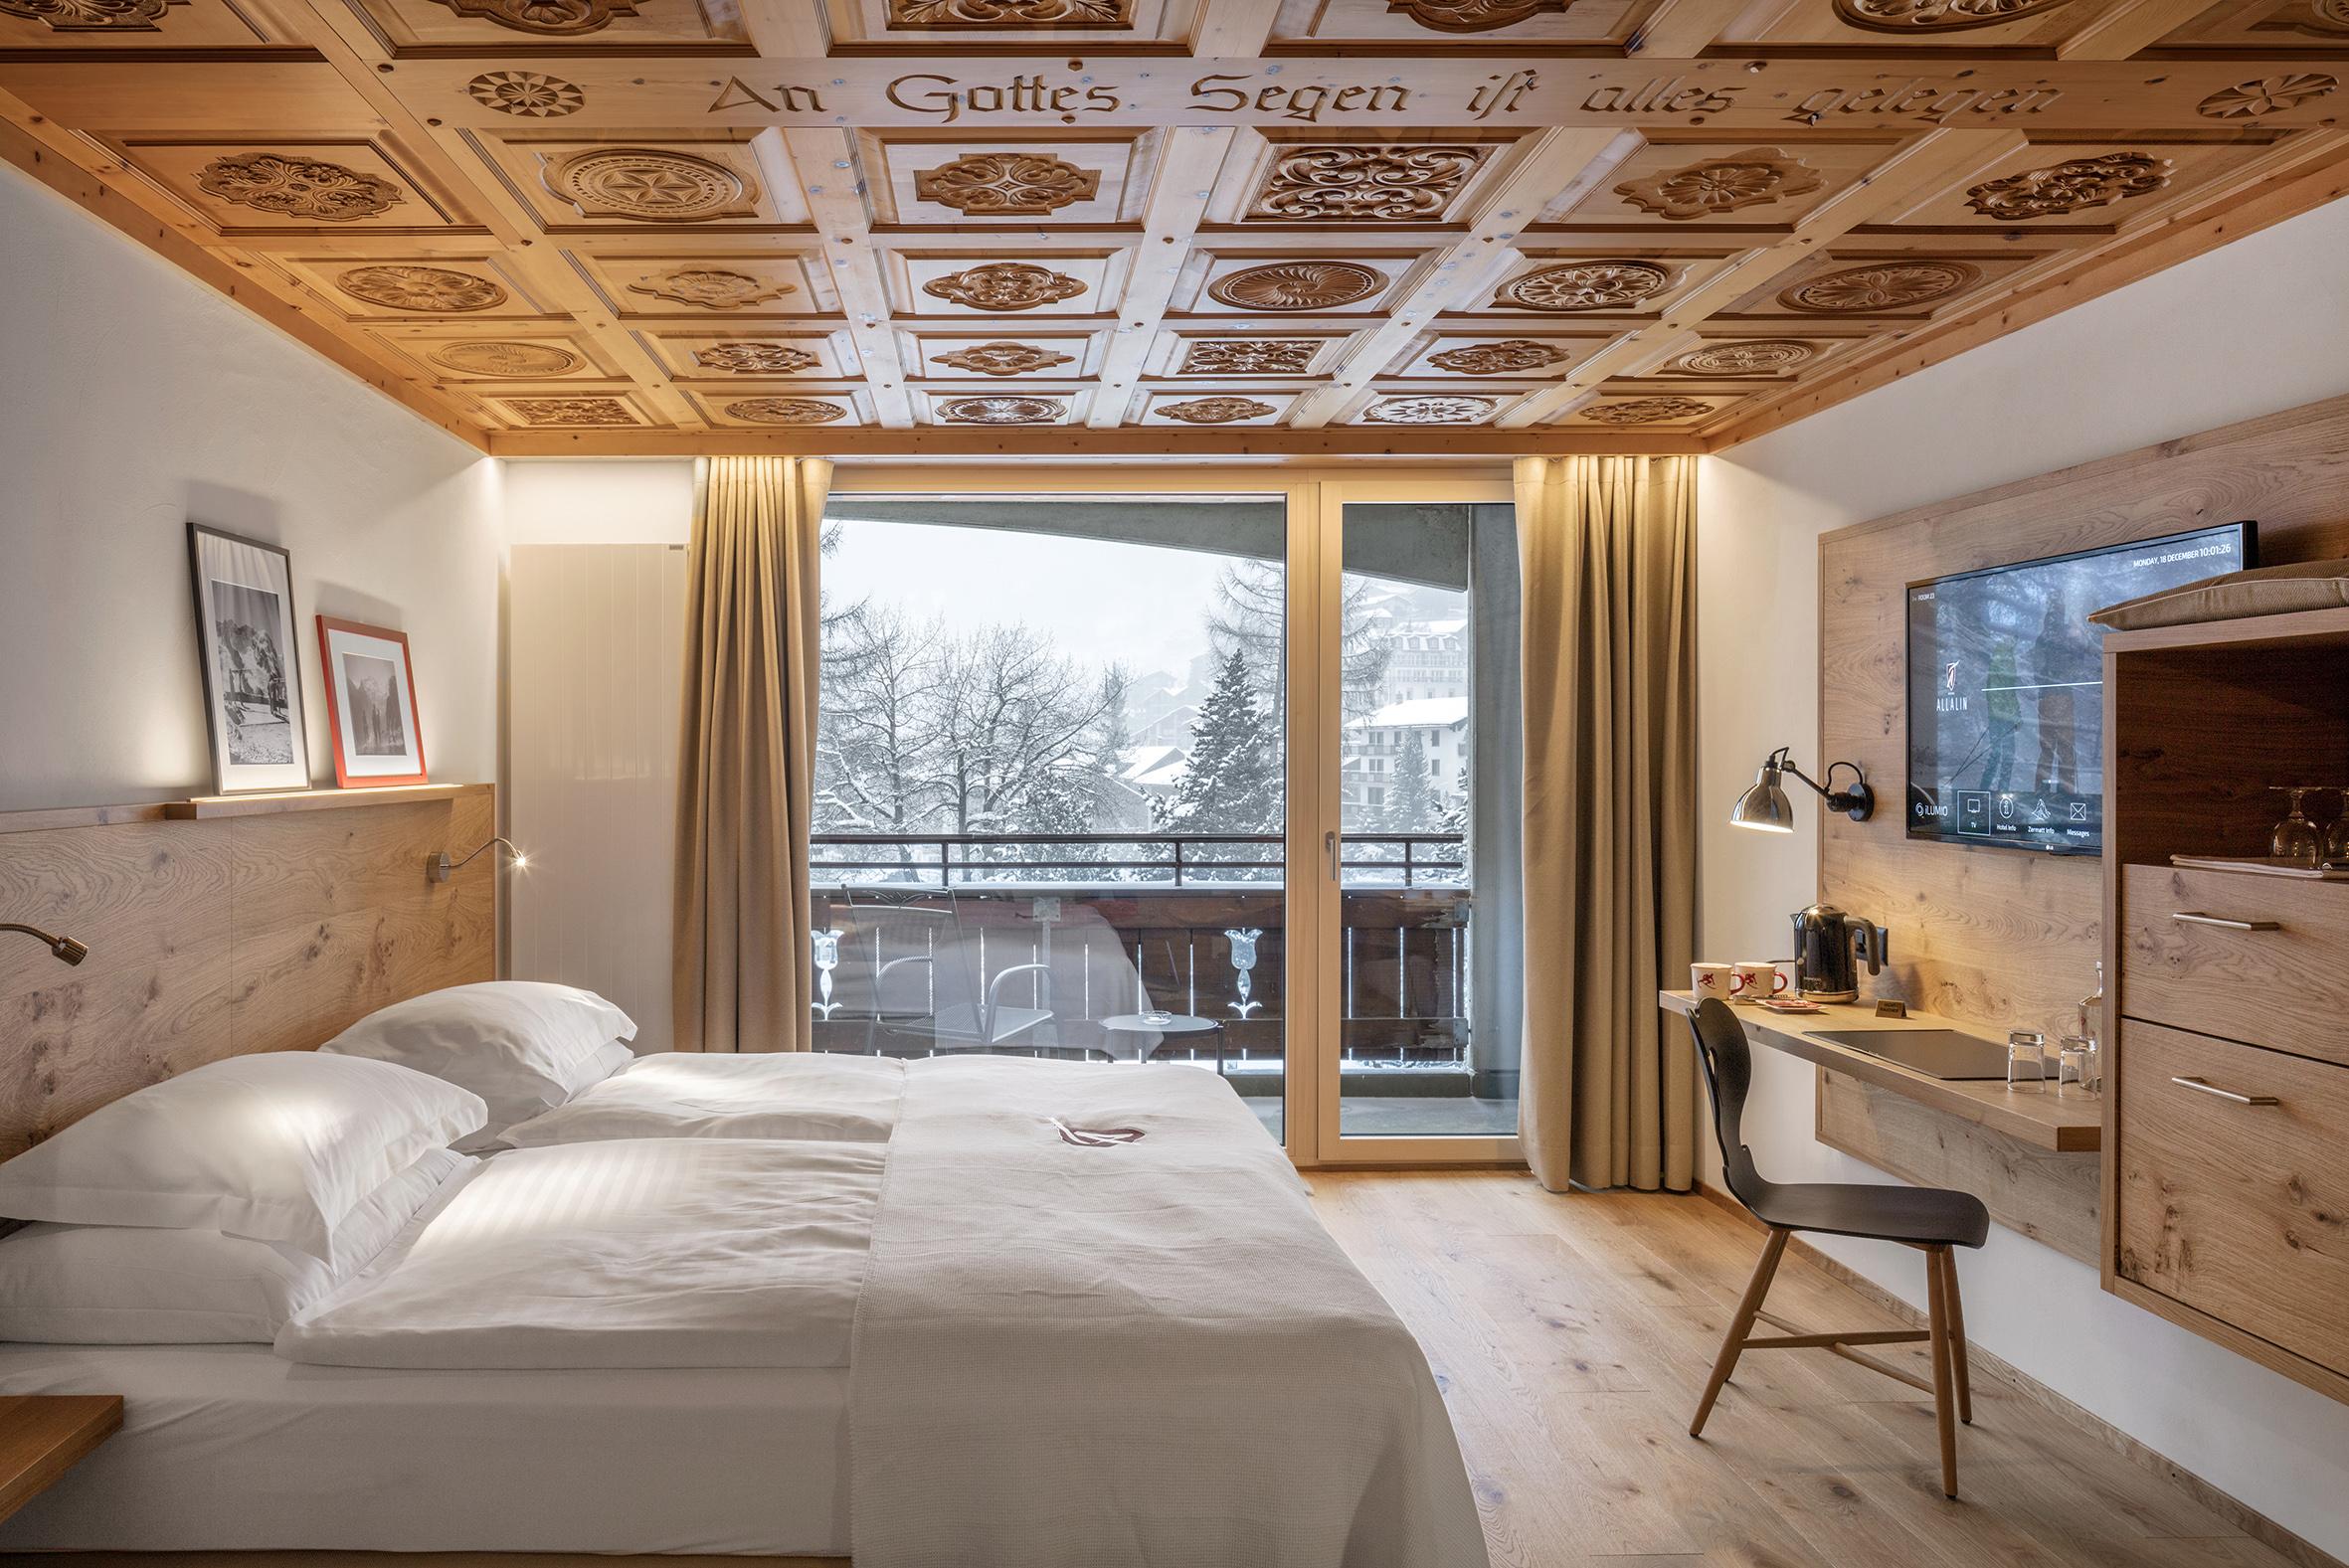 Swiss Alpine Hotel Allalin Церматт Экстерьер фото